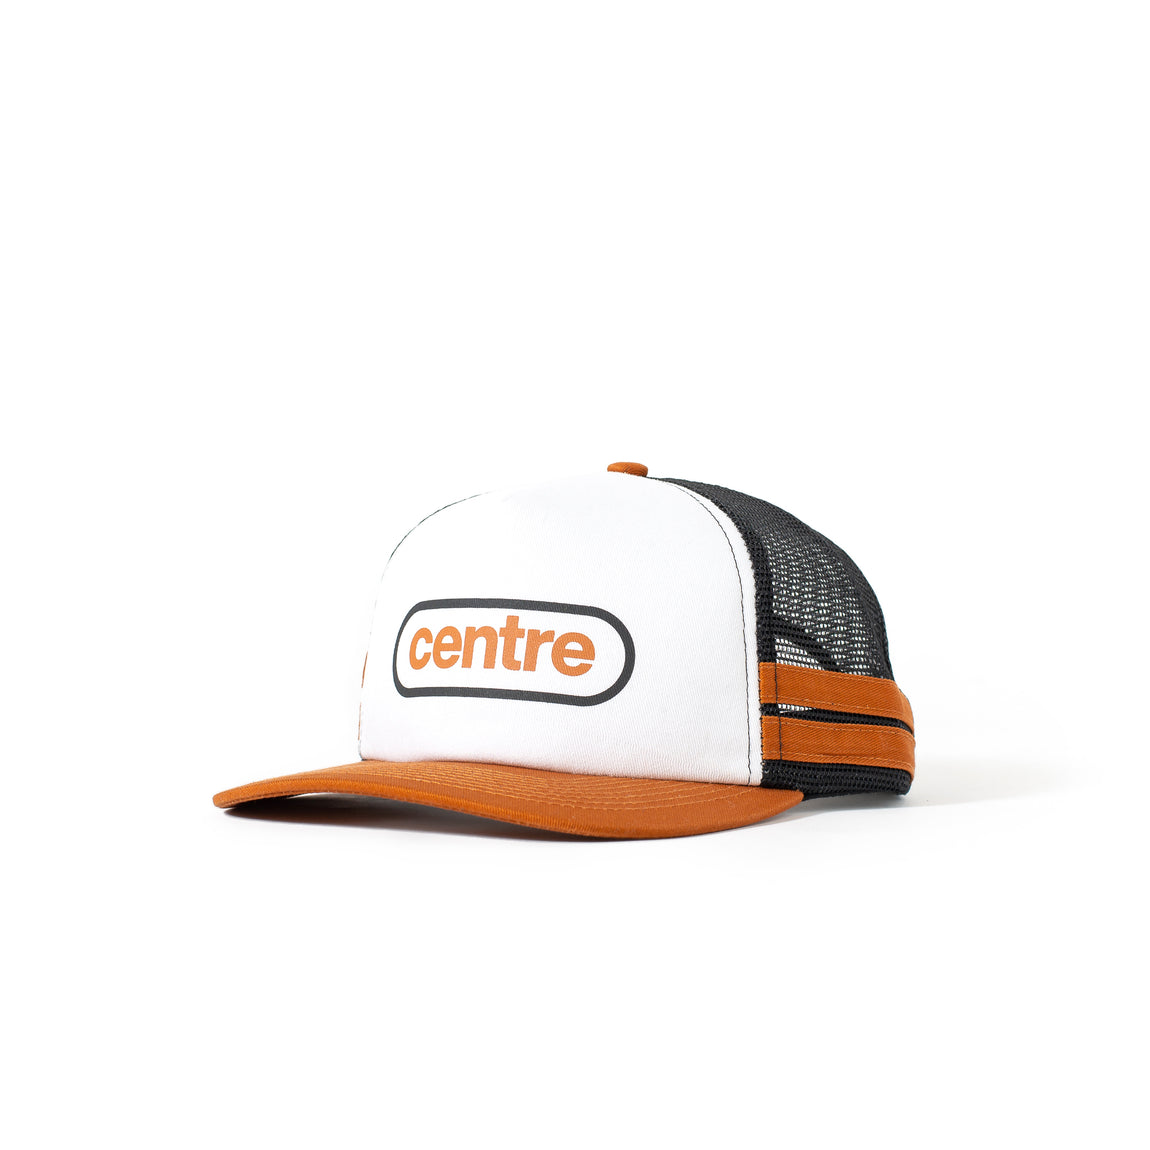 Centre Retro Trucker Hat (Adobe/Black/White) - Centre Retro Trucker Hat (Adobe/Black/White) - 